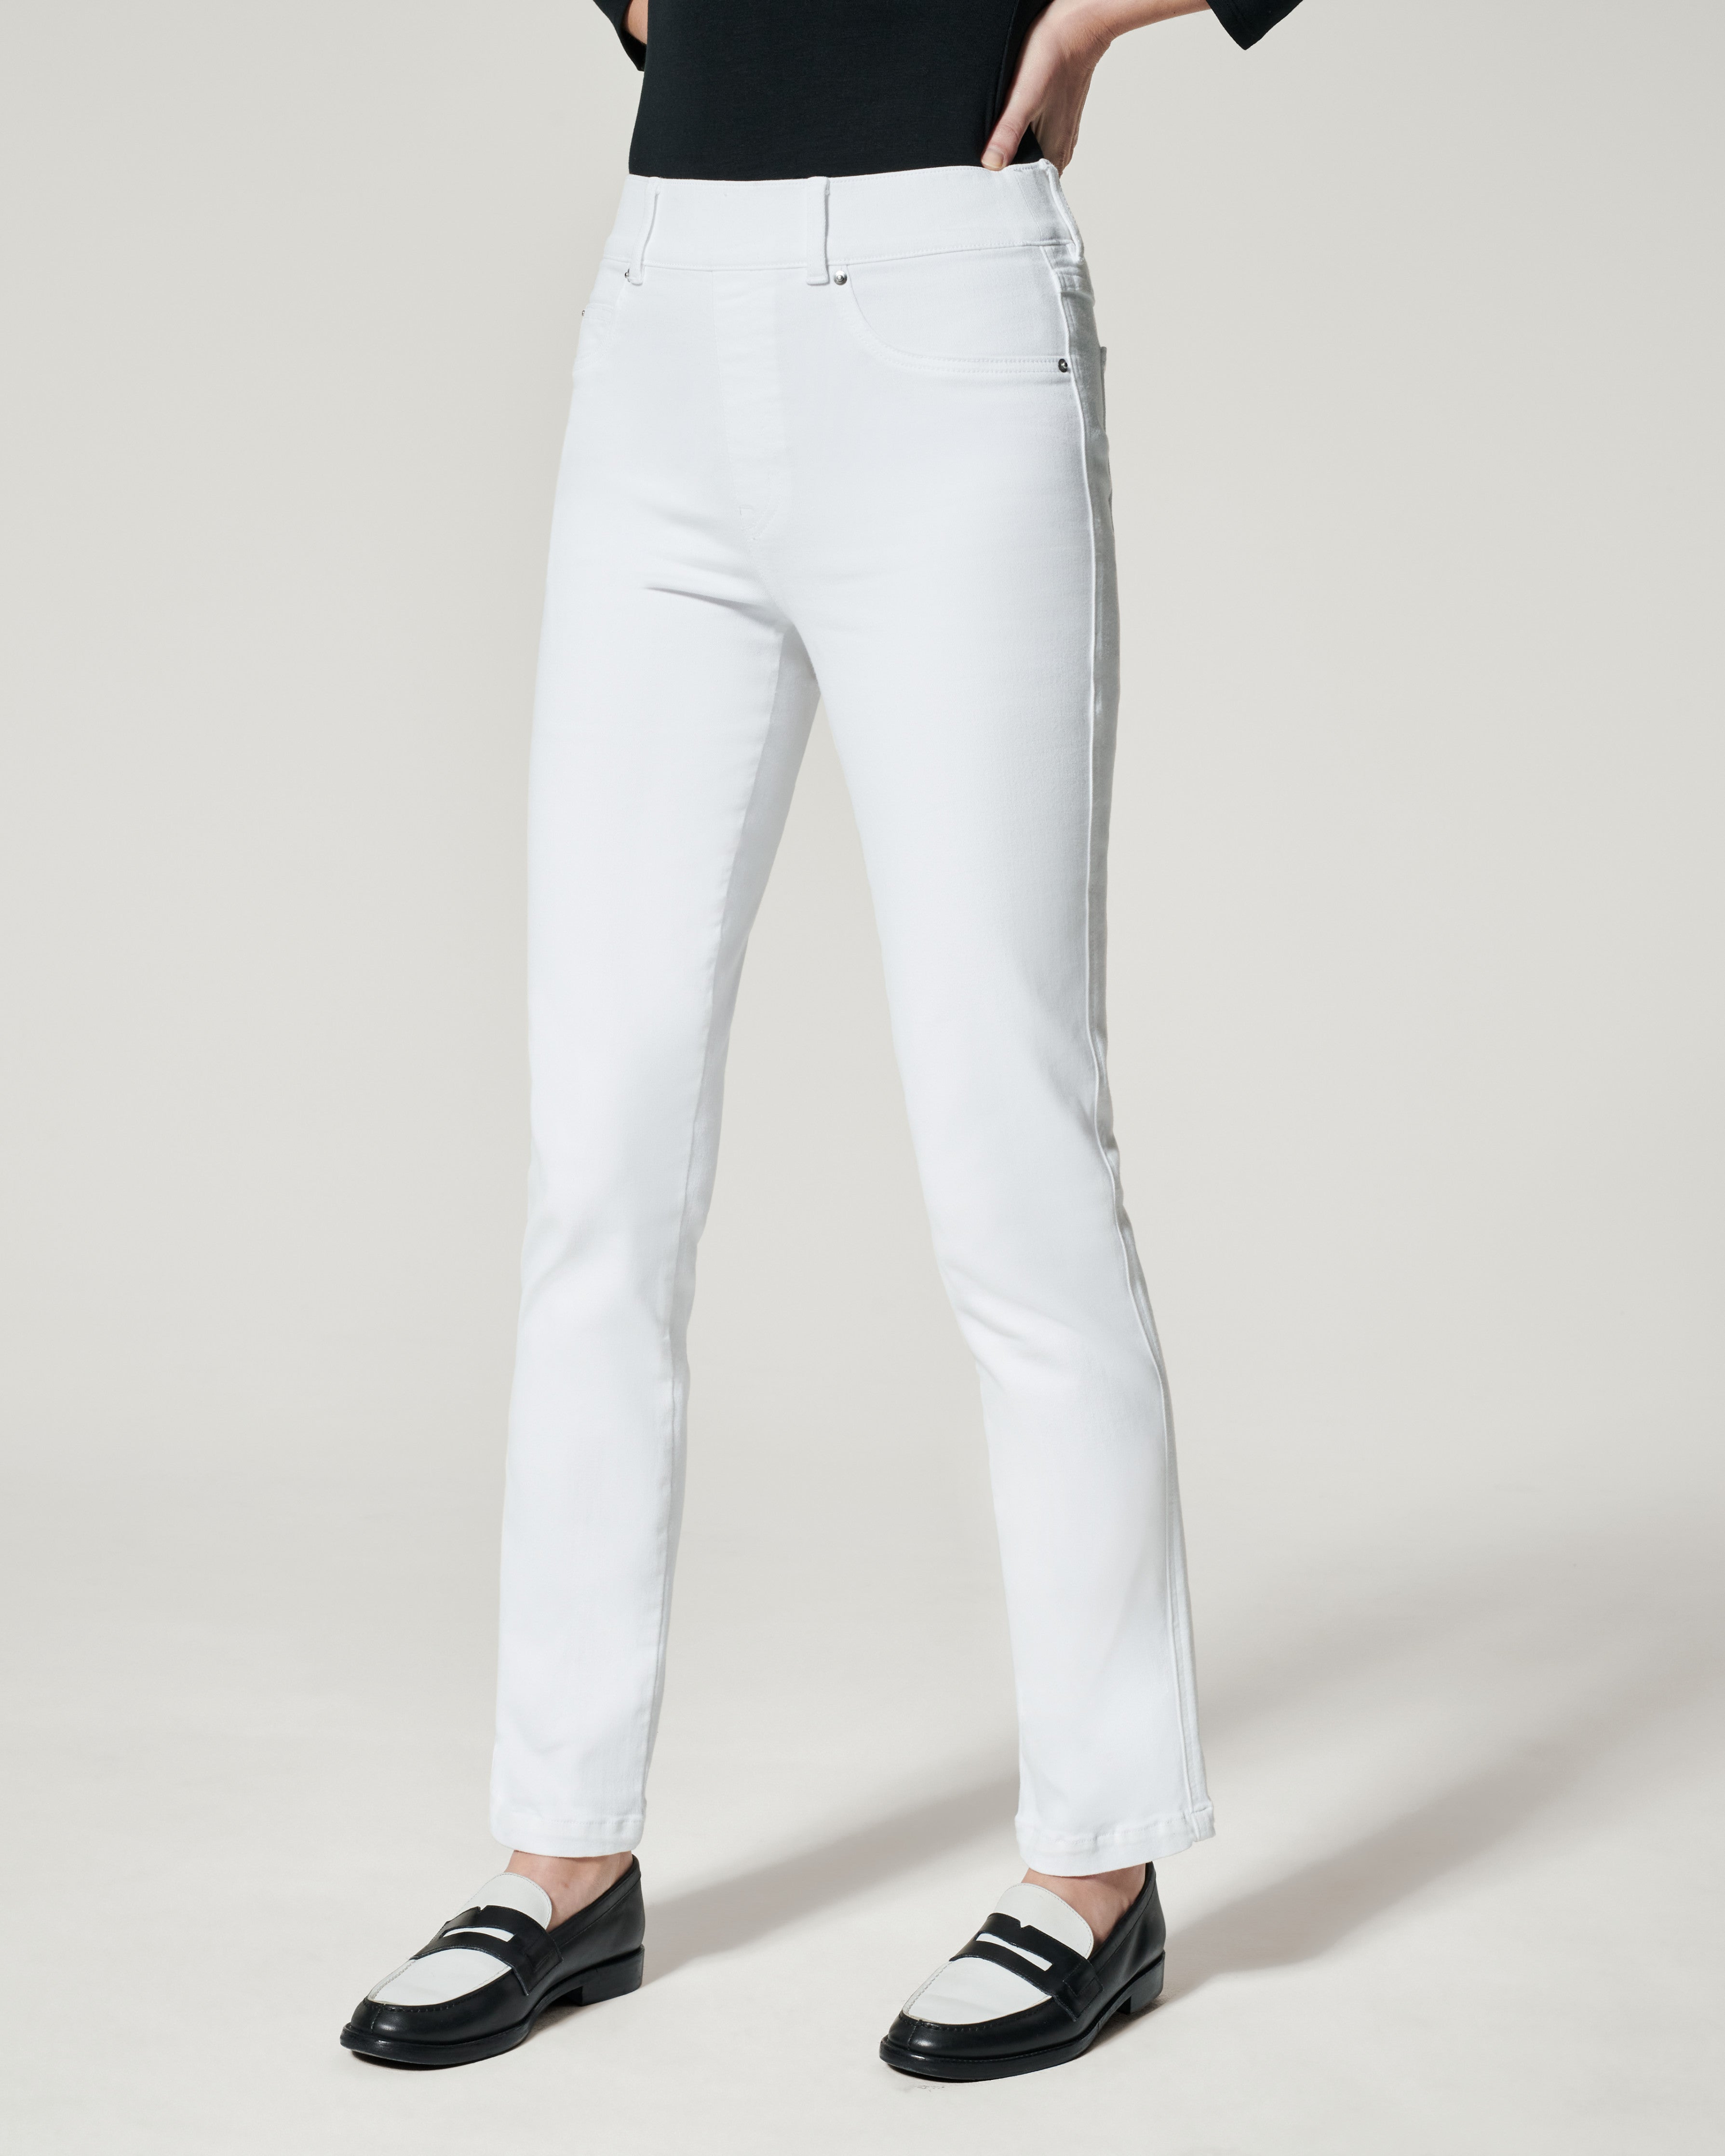 $128 NWT Spanx Distressed Skinny Jeans White Size XS